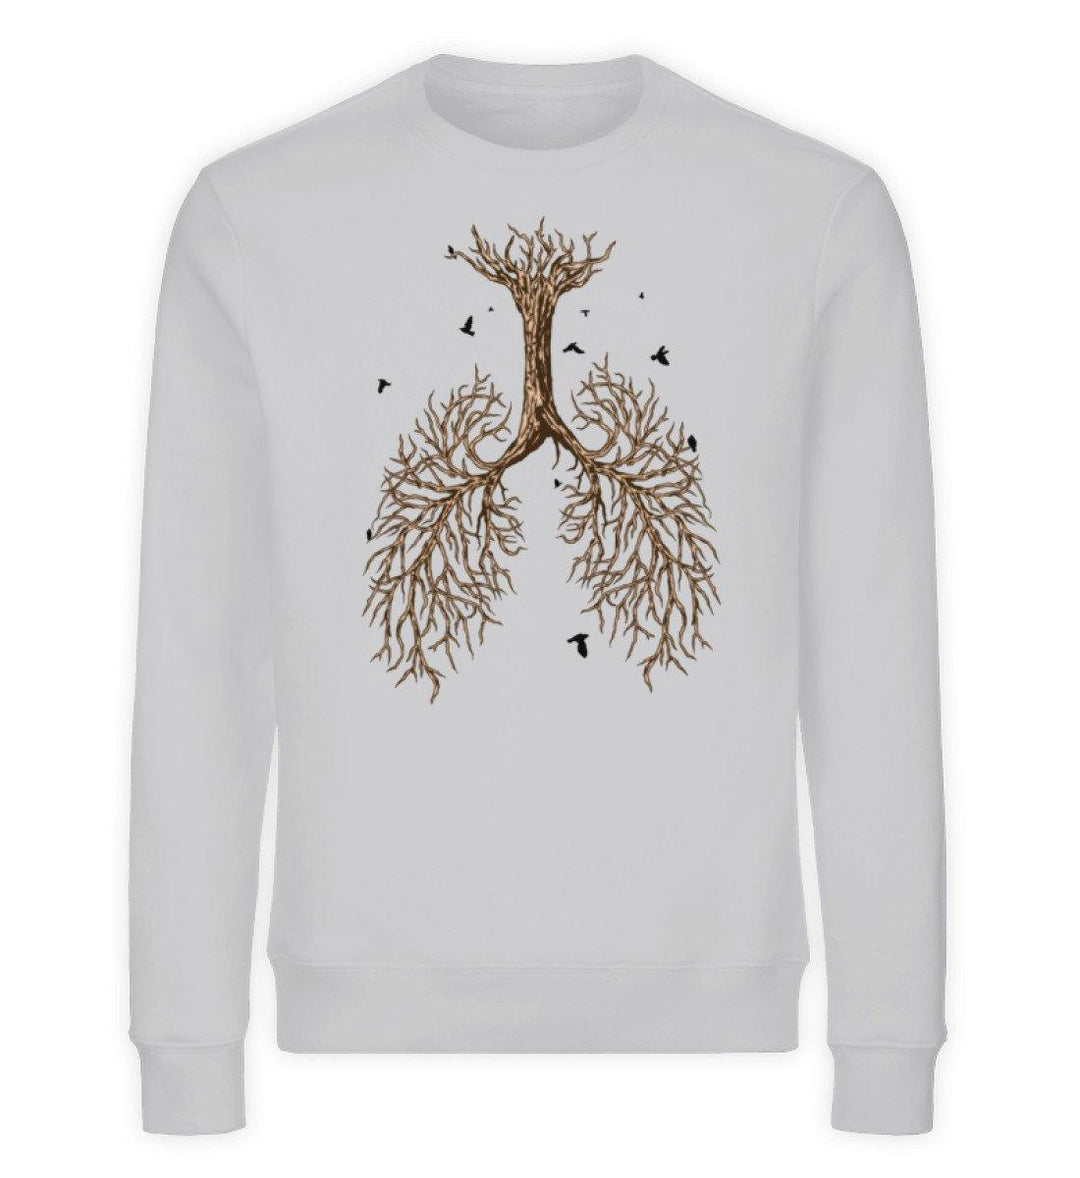 Lungenwurzel - Unisex Bio Sweatshirt